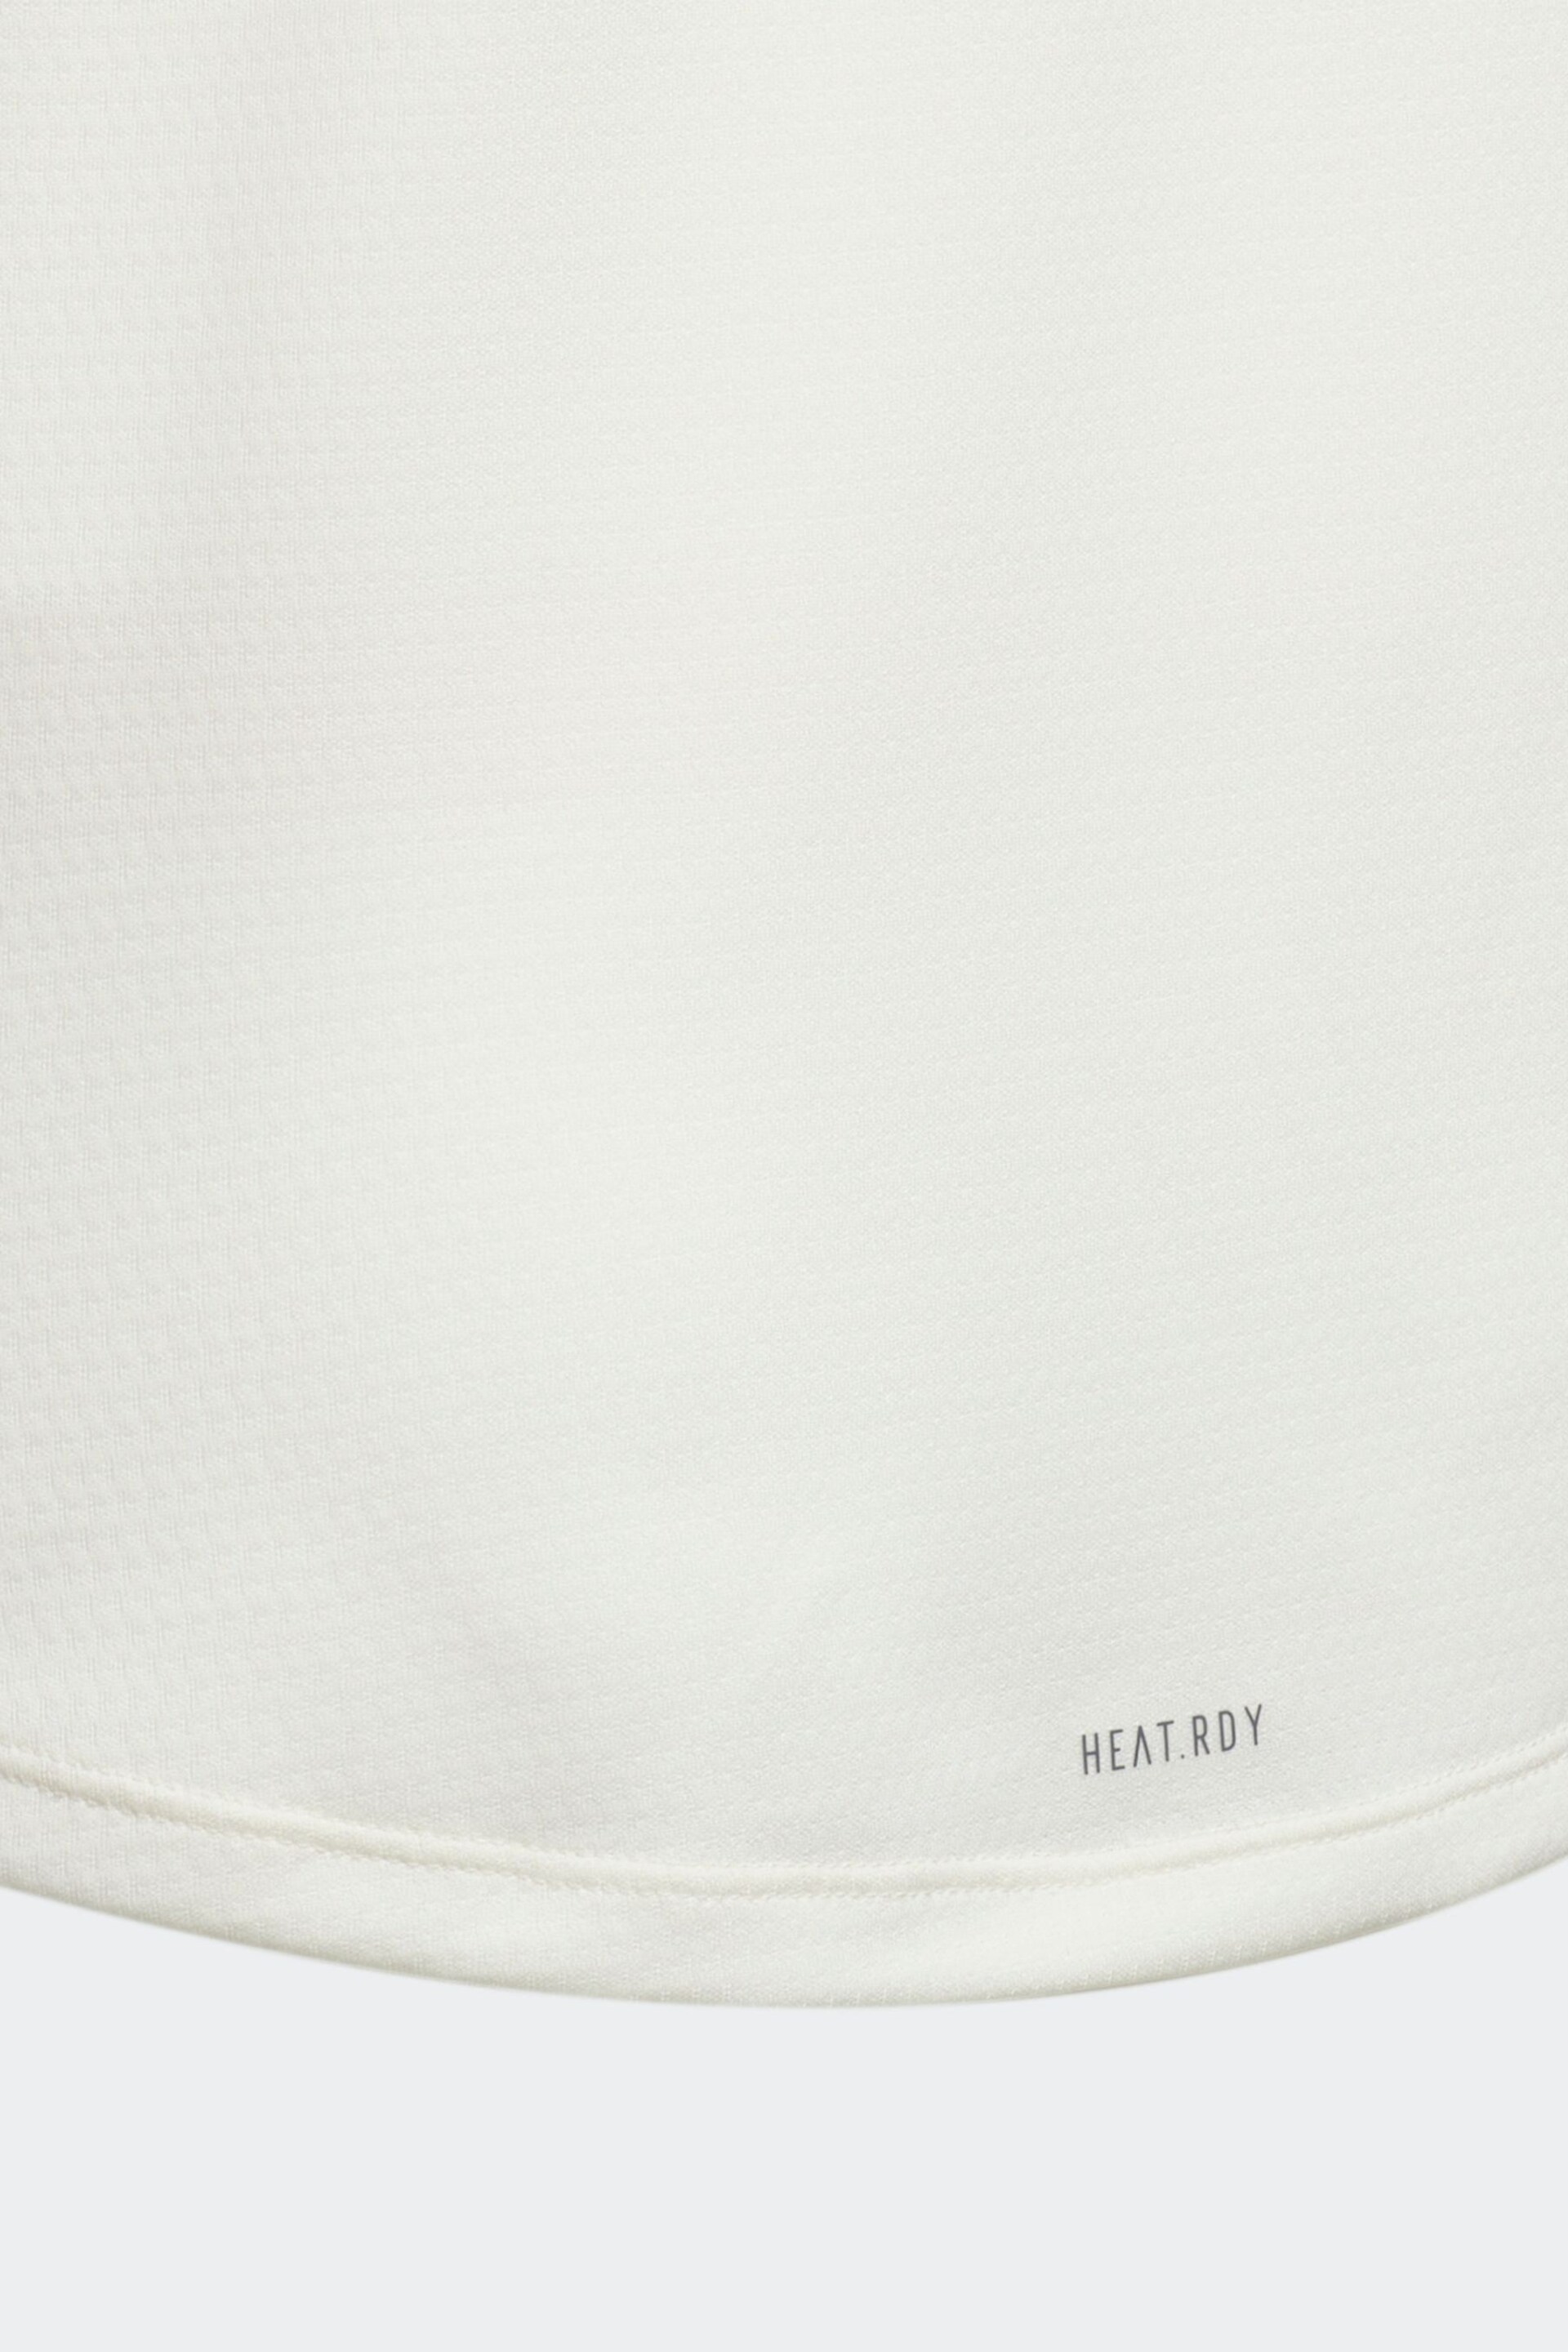 adidas Golf Cream Heatdry Sport T-Shirt - Image 6 of 6